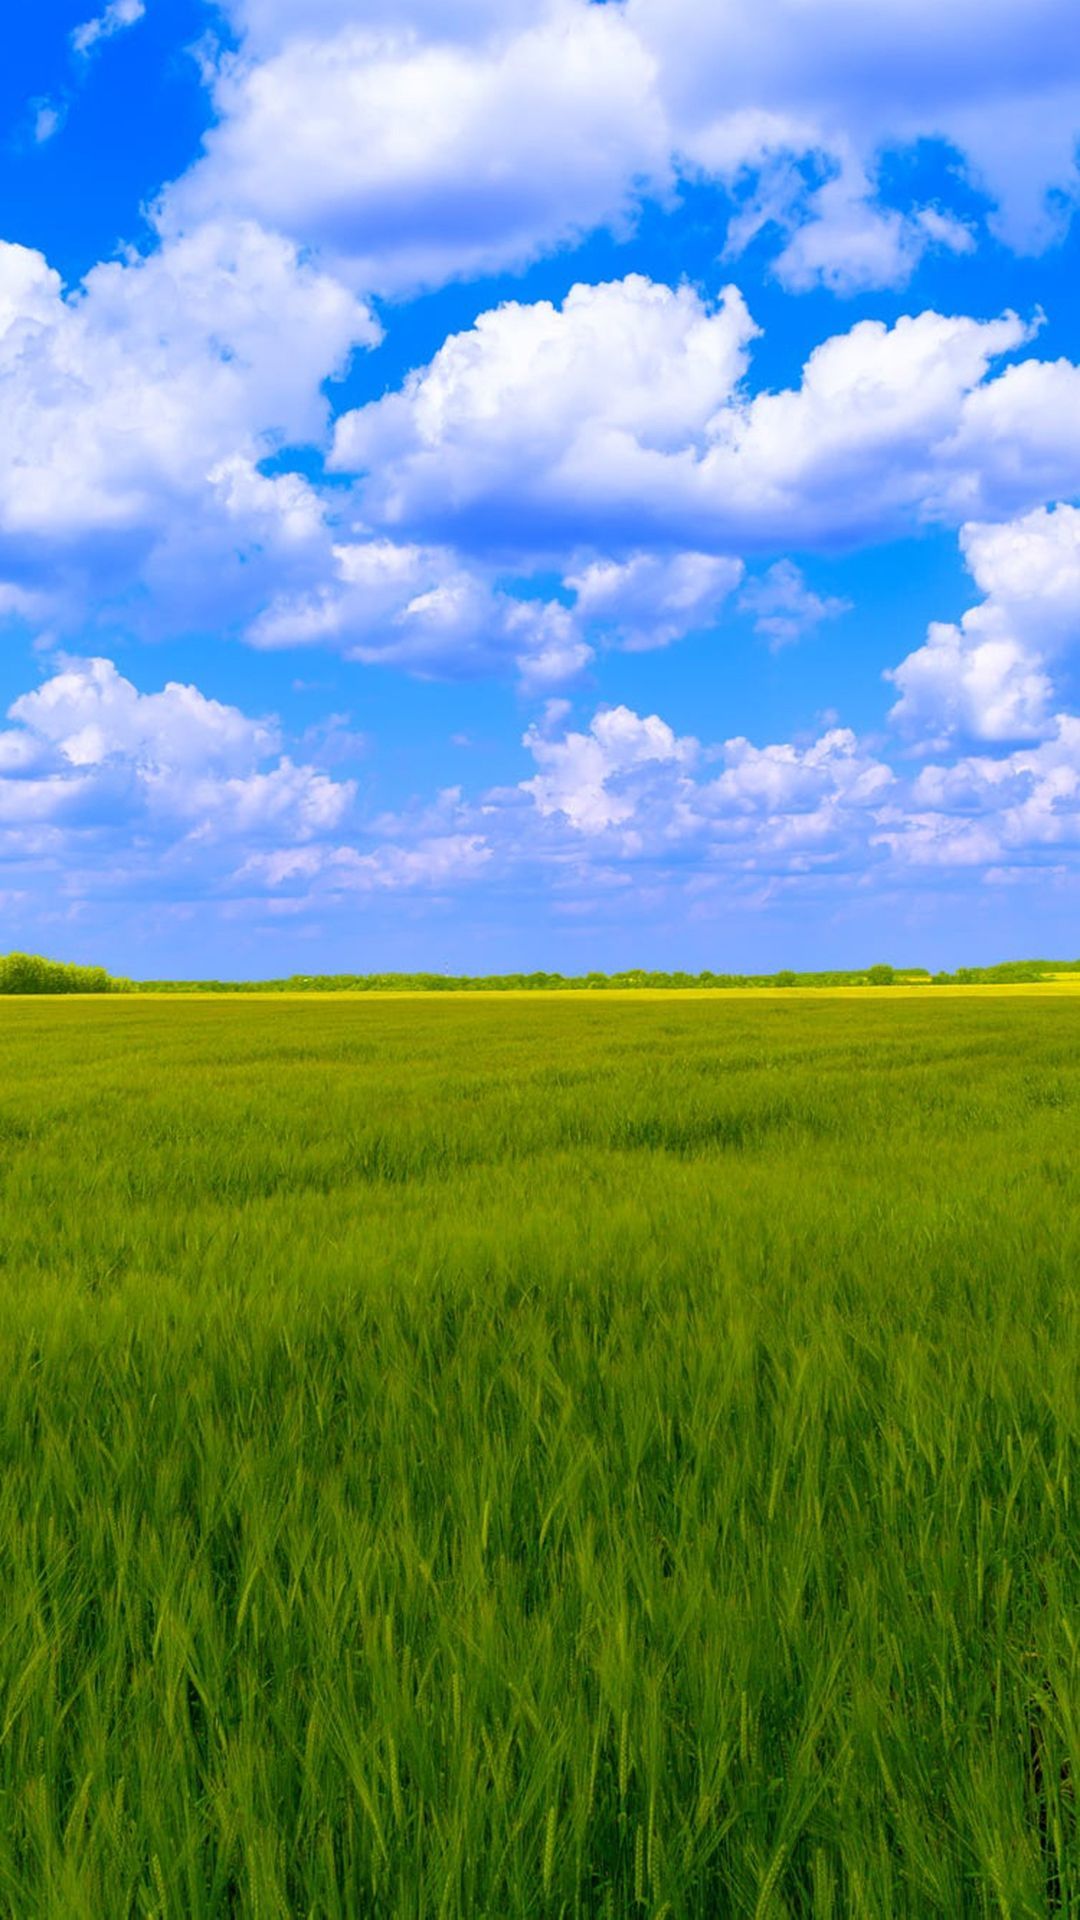 Blue sky, white clouds, green grass background. Green grass